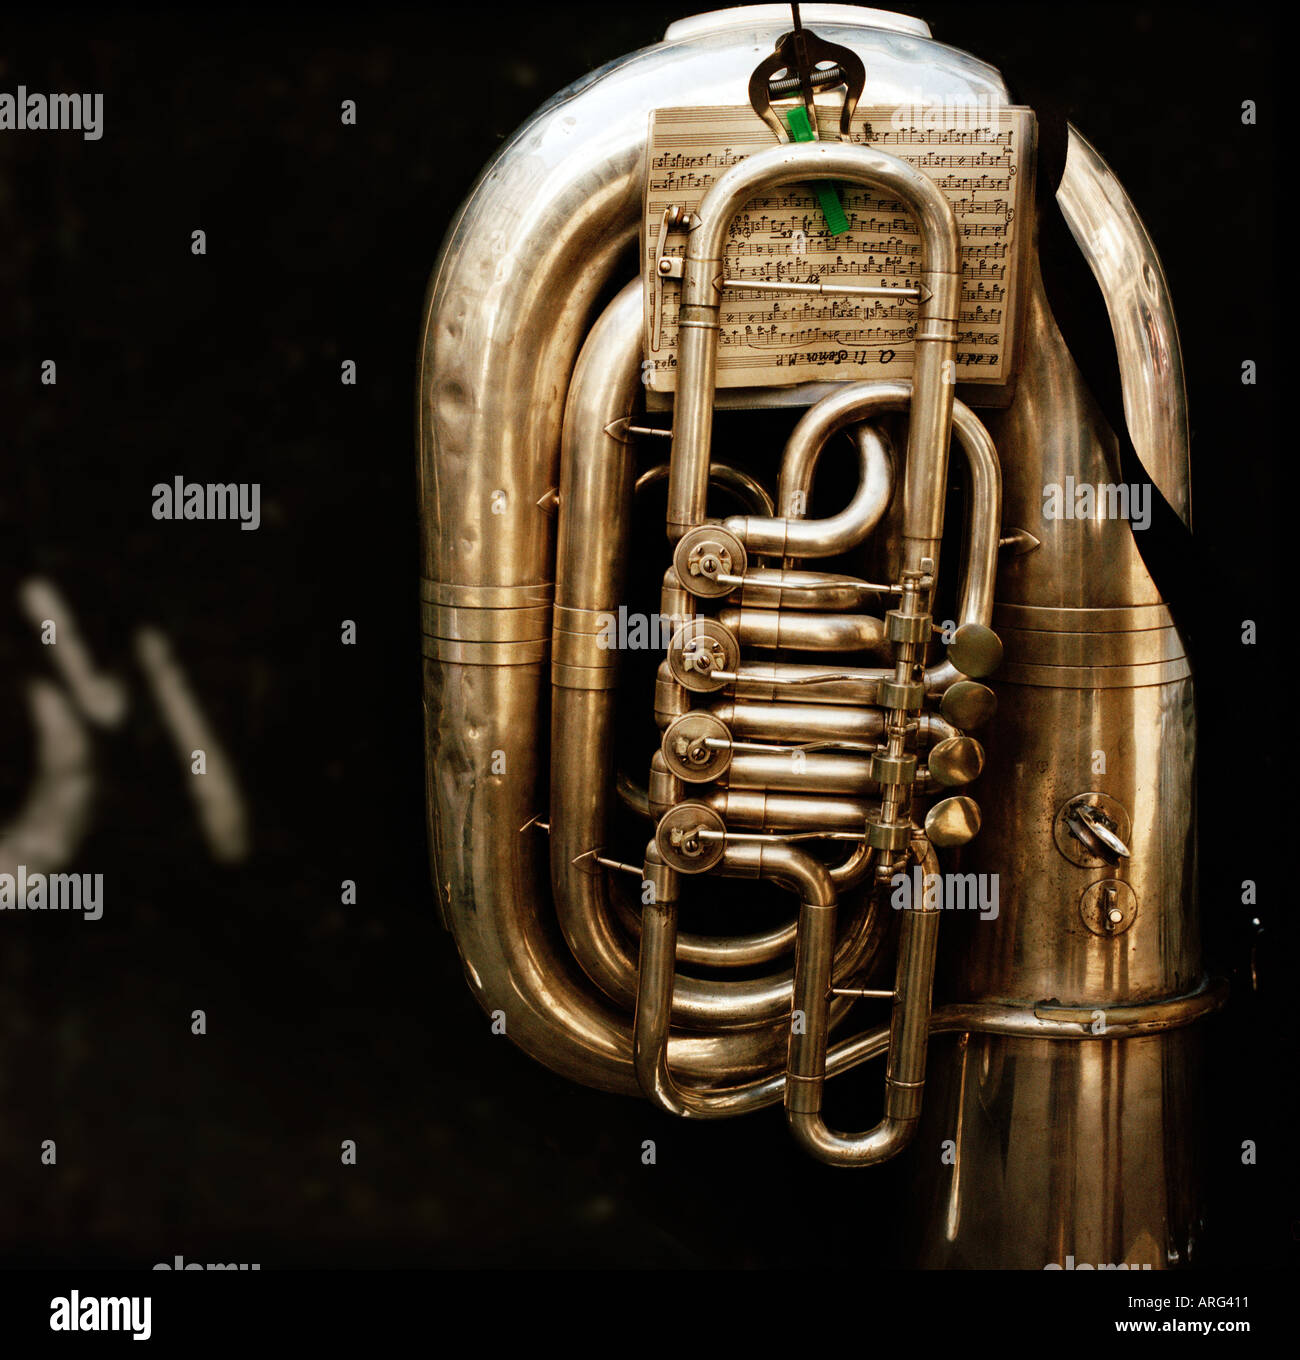 brass tuba with music score Stock Photo